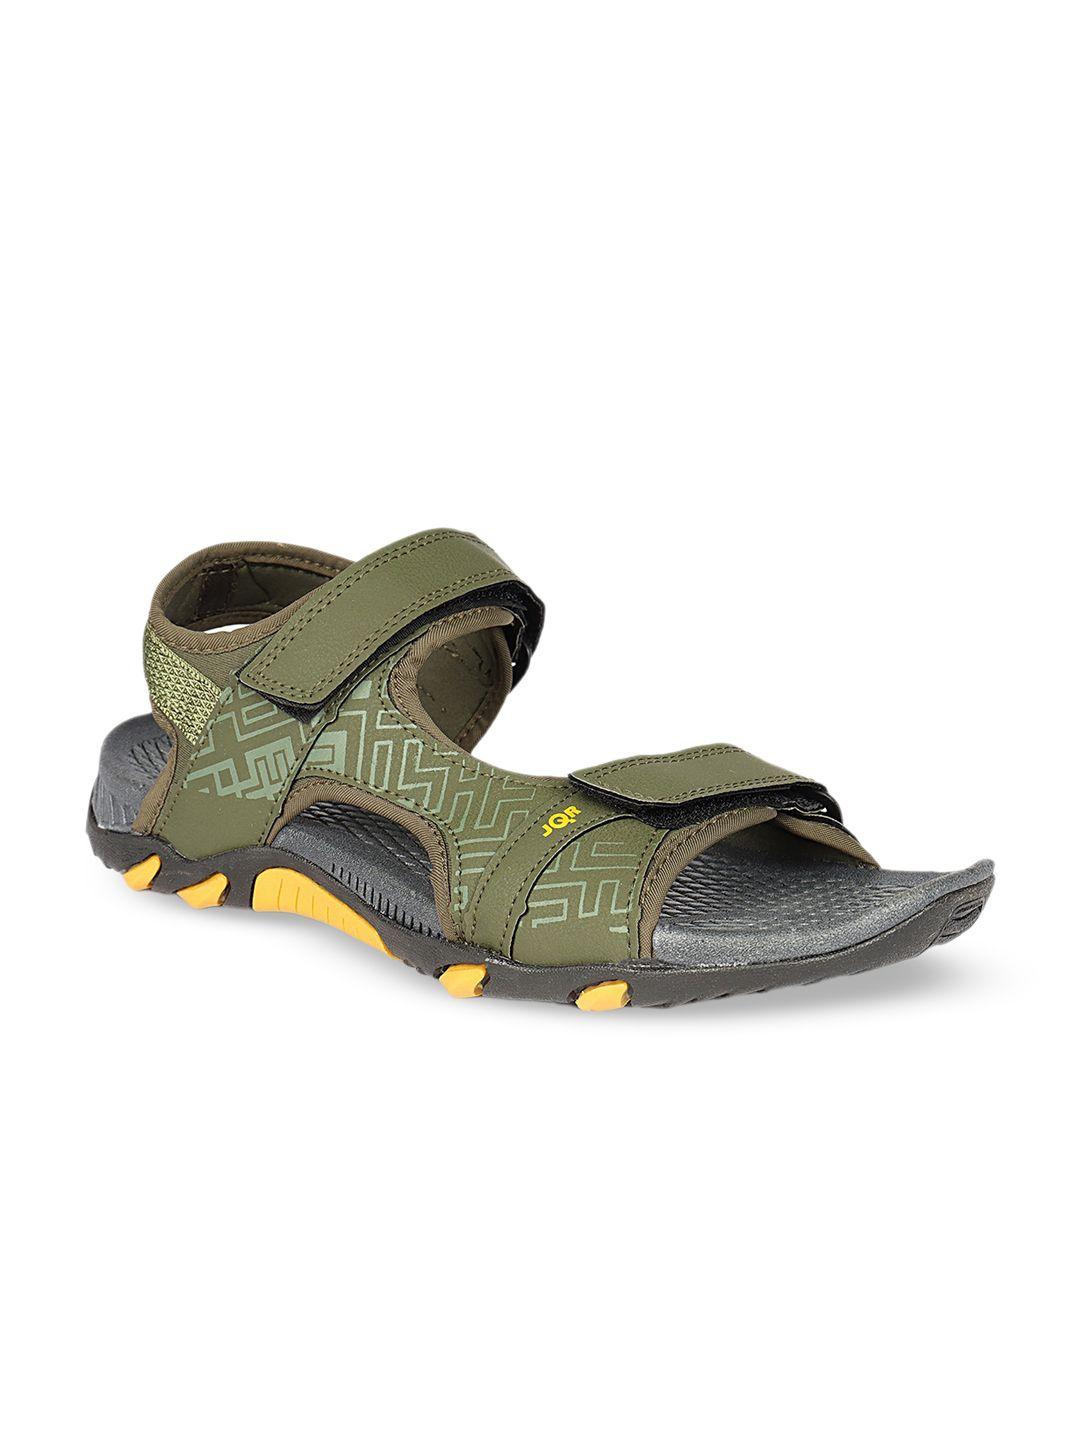 jqr-men-printed-velcro-sports-sandals